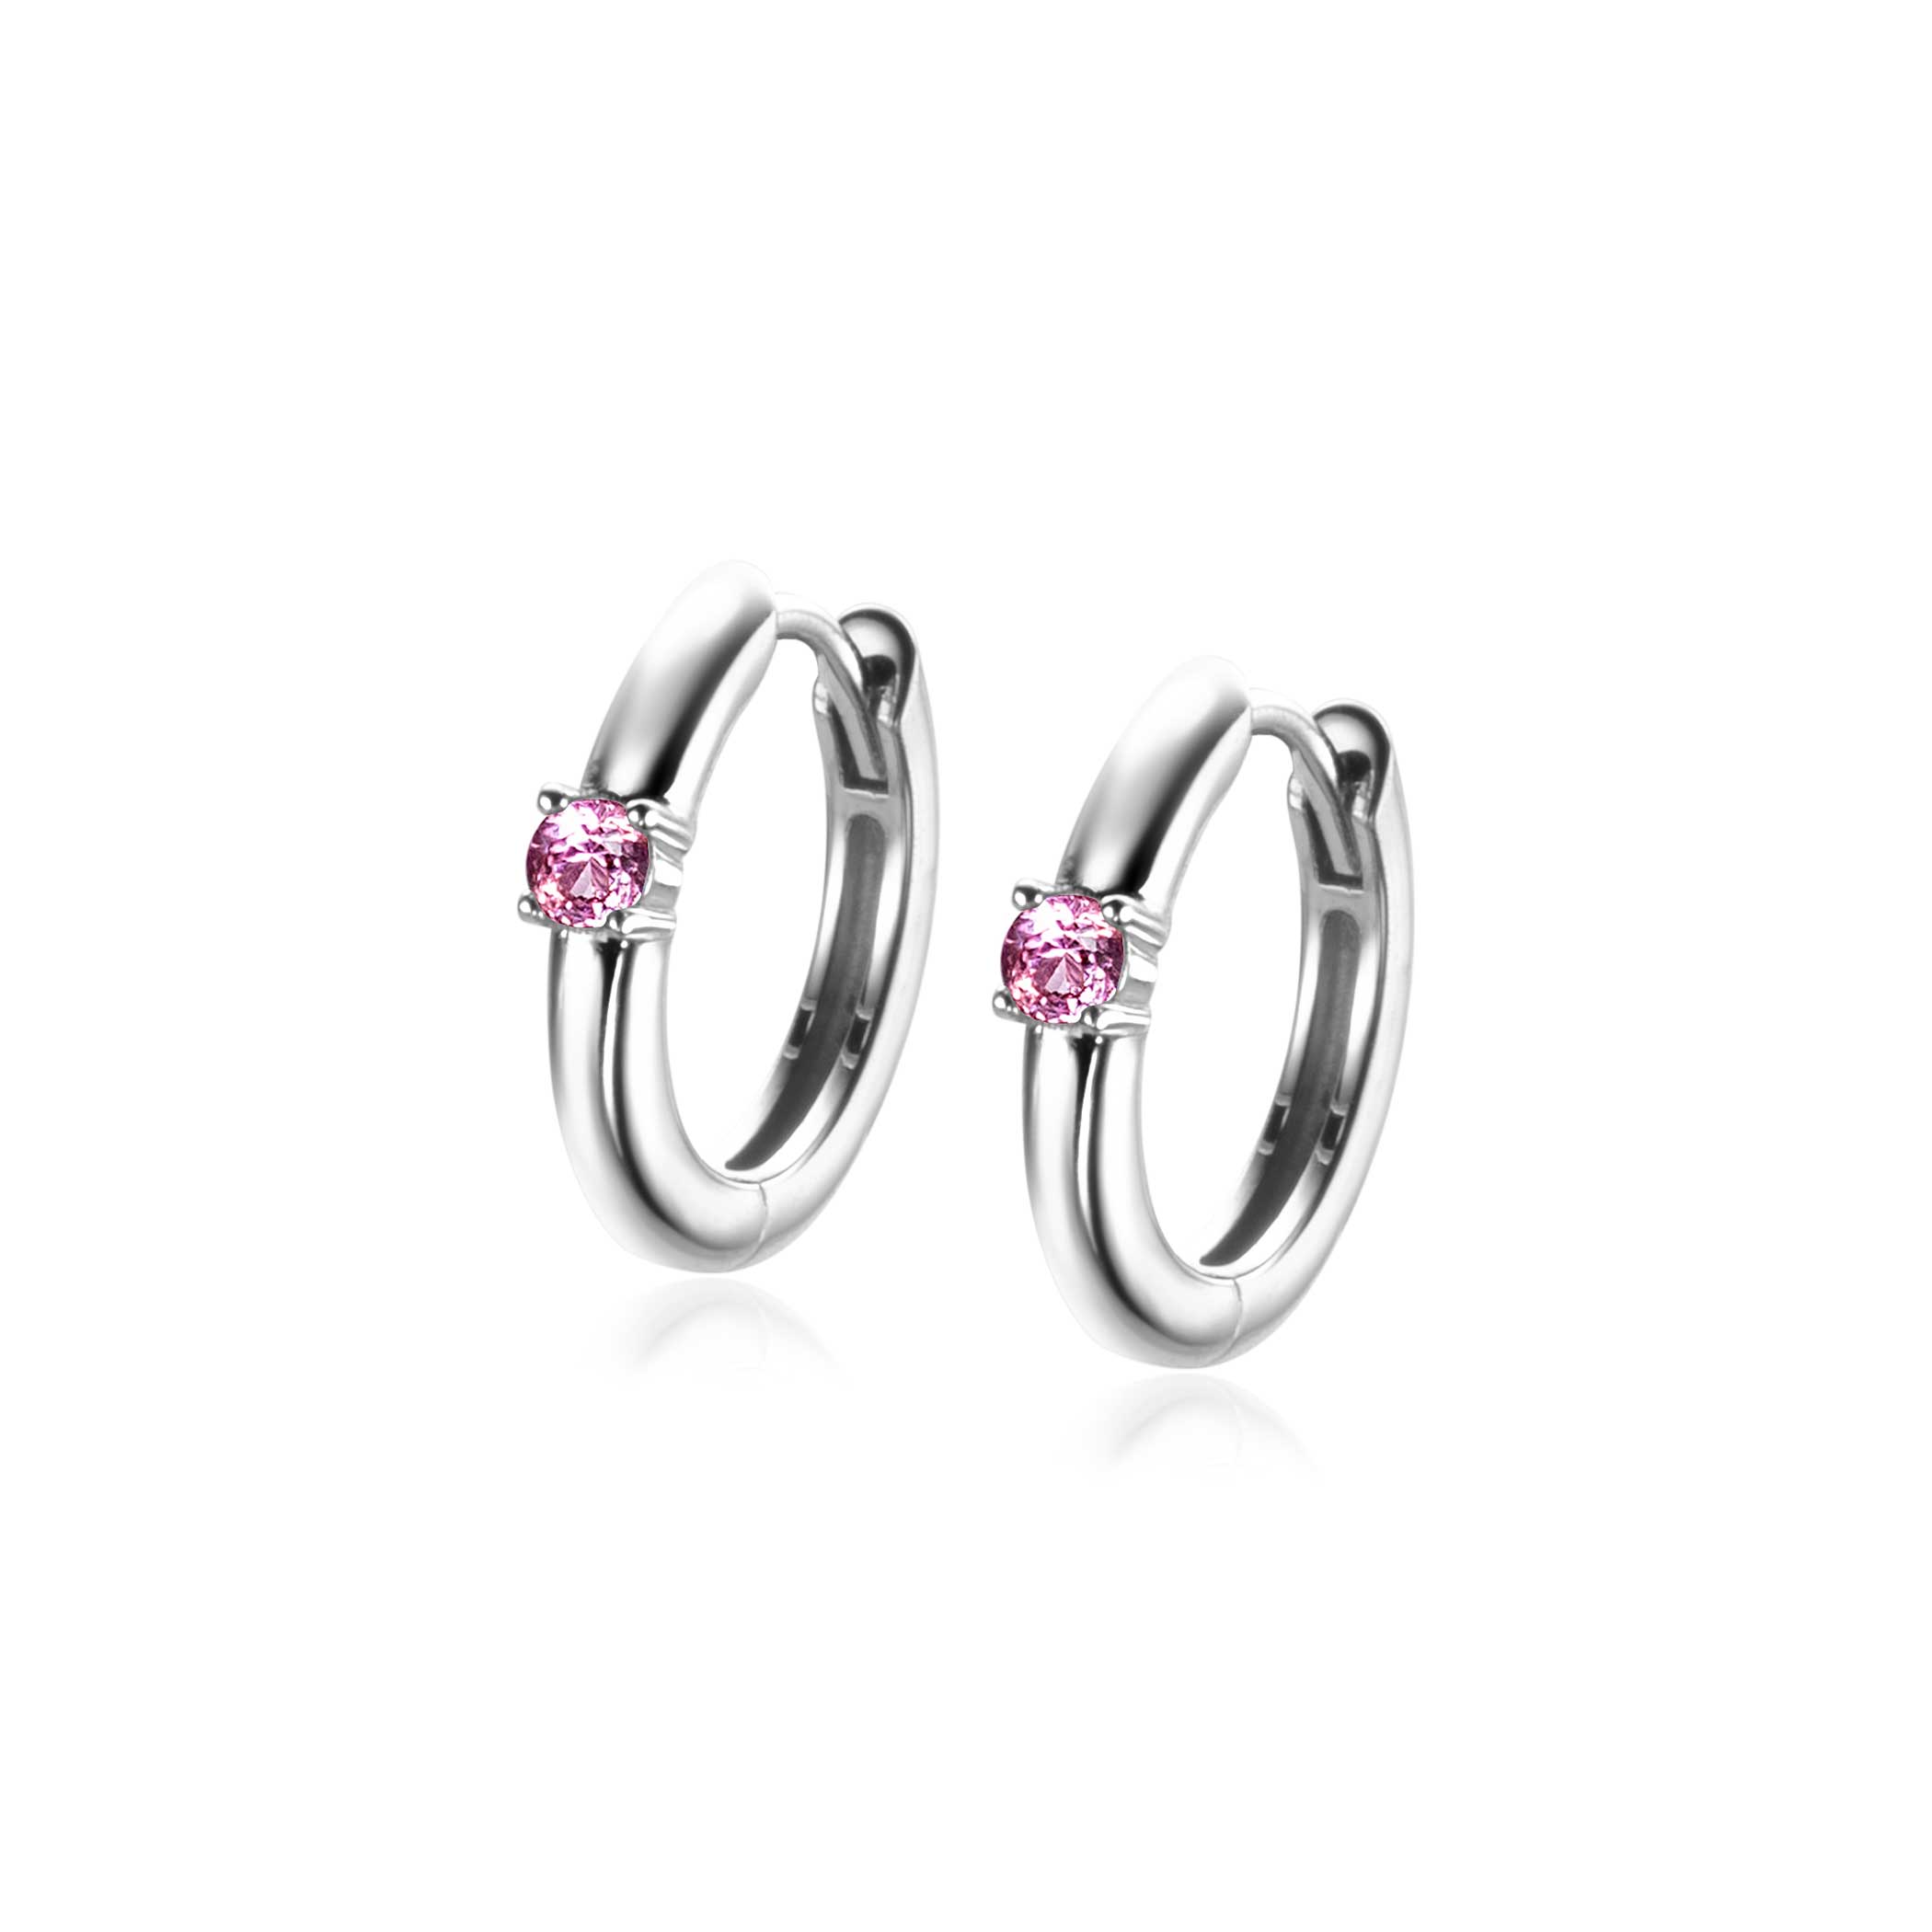 OCTOBER Hoop Earrings 13mm Sterling Silver with Birthstone Pink Rose Quartz Zirconia